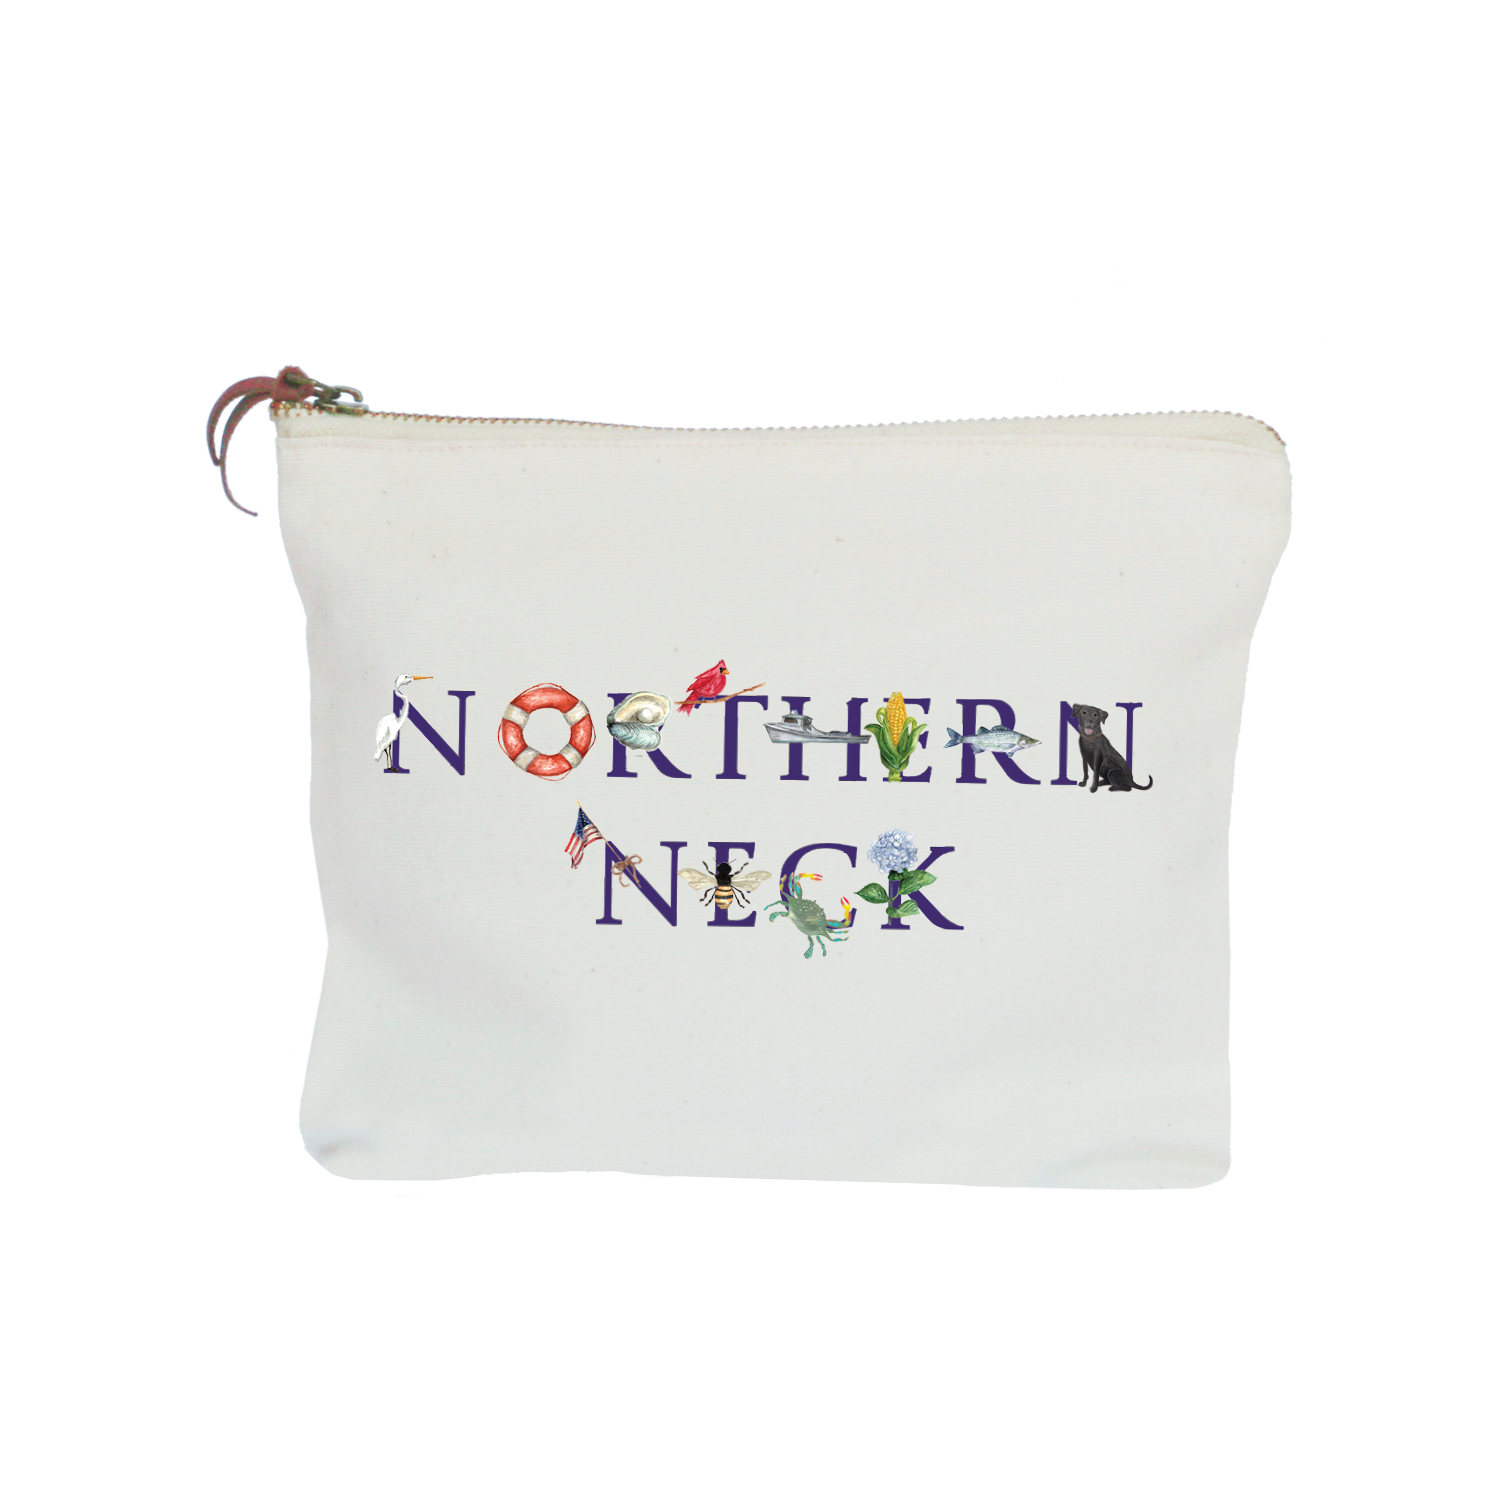 northern neck zipper pouch